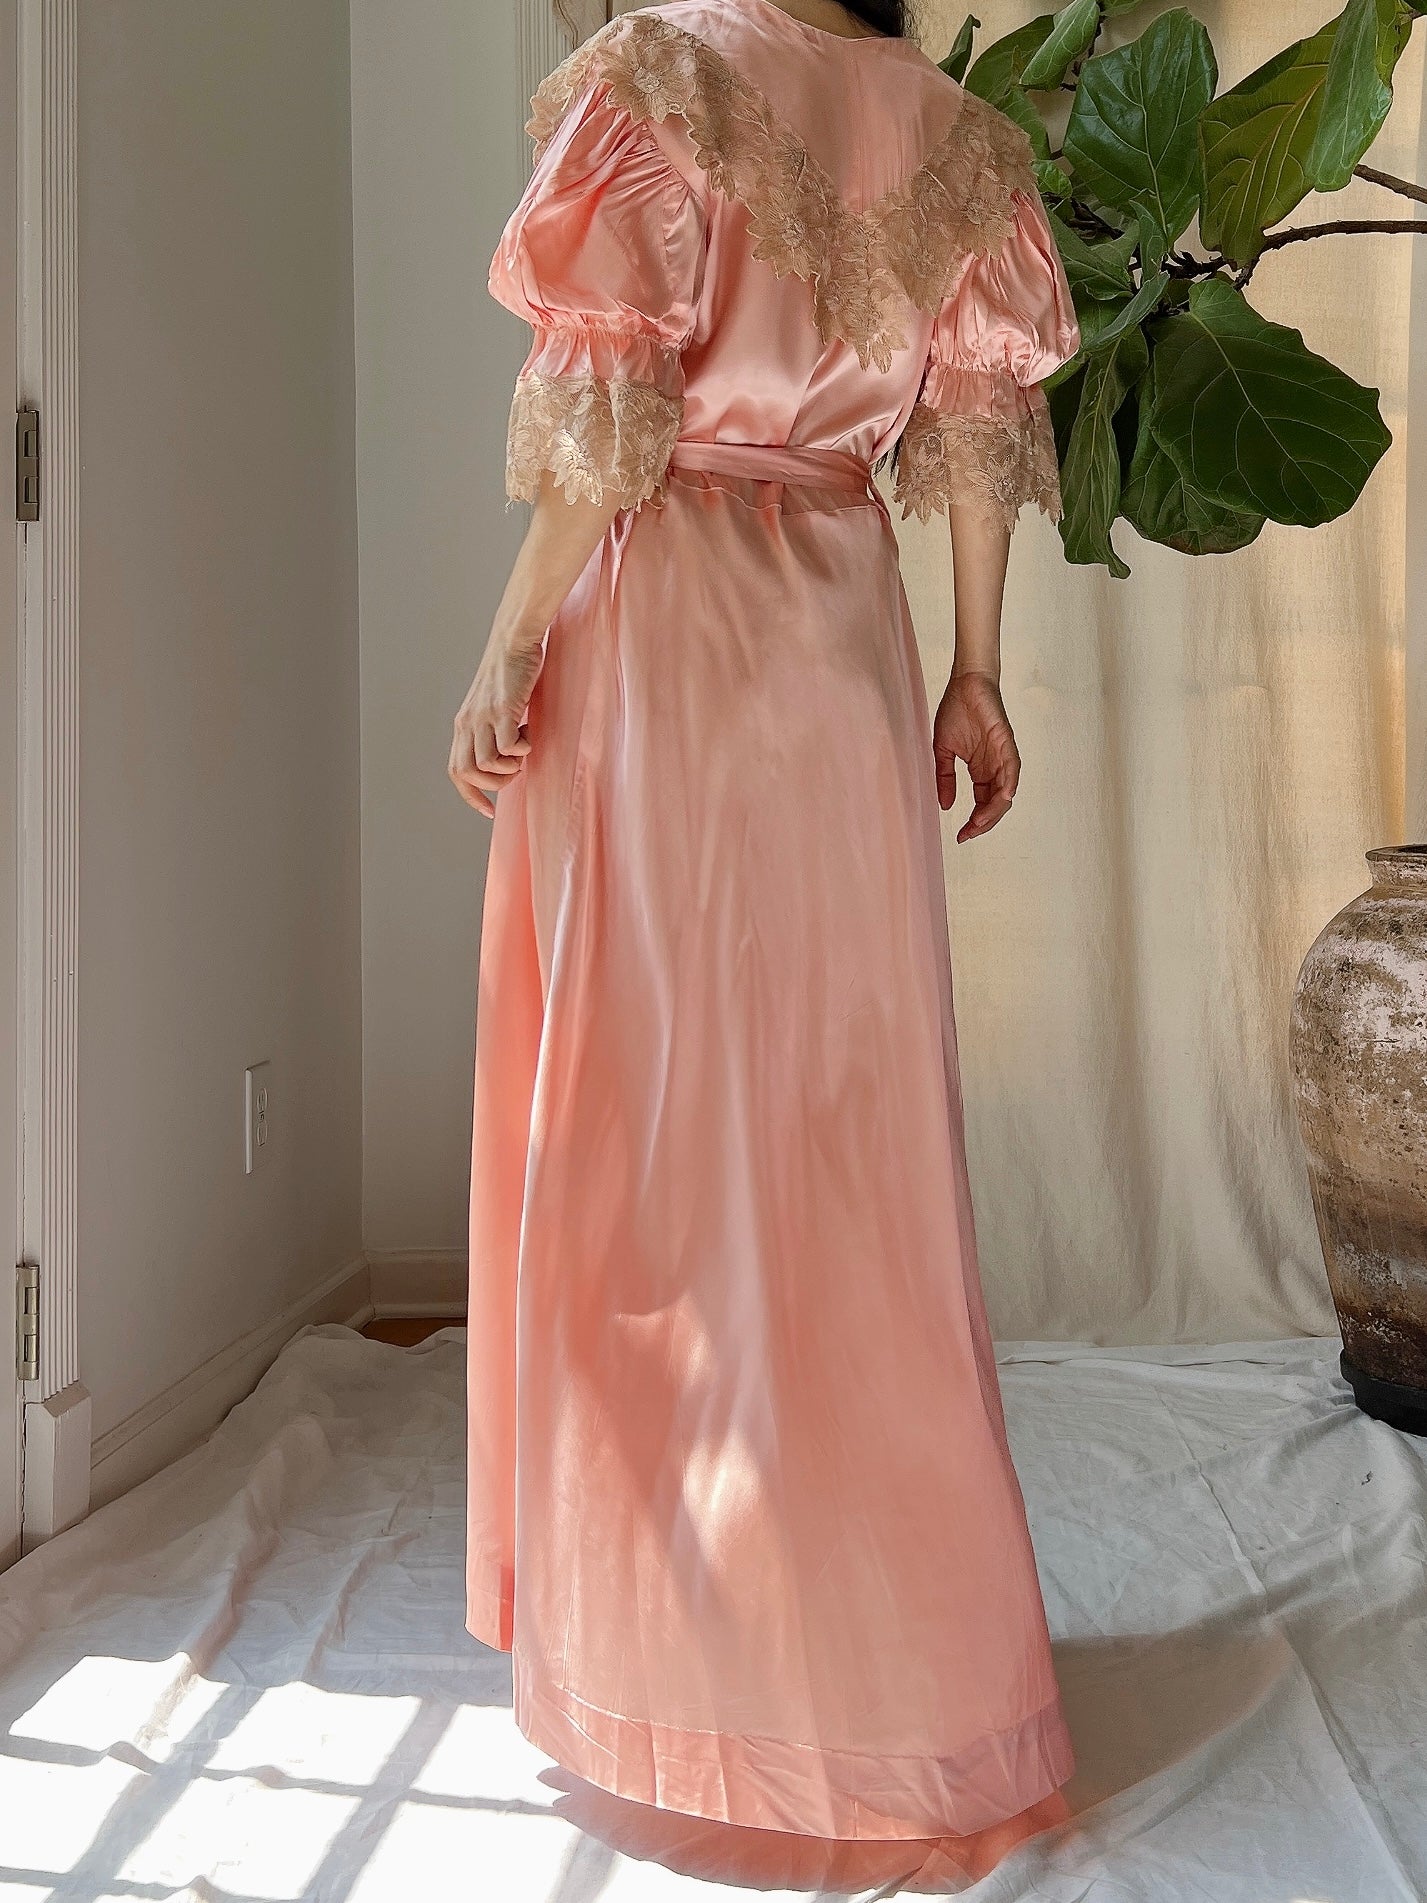 1930s Silk Dress Late Victorian Era Style Inspiration Dressing Gown   Dresses  AliExpress